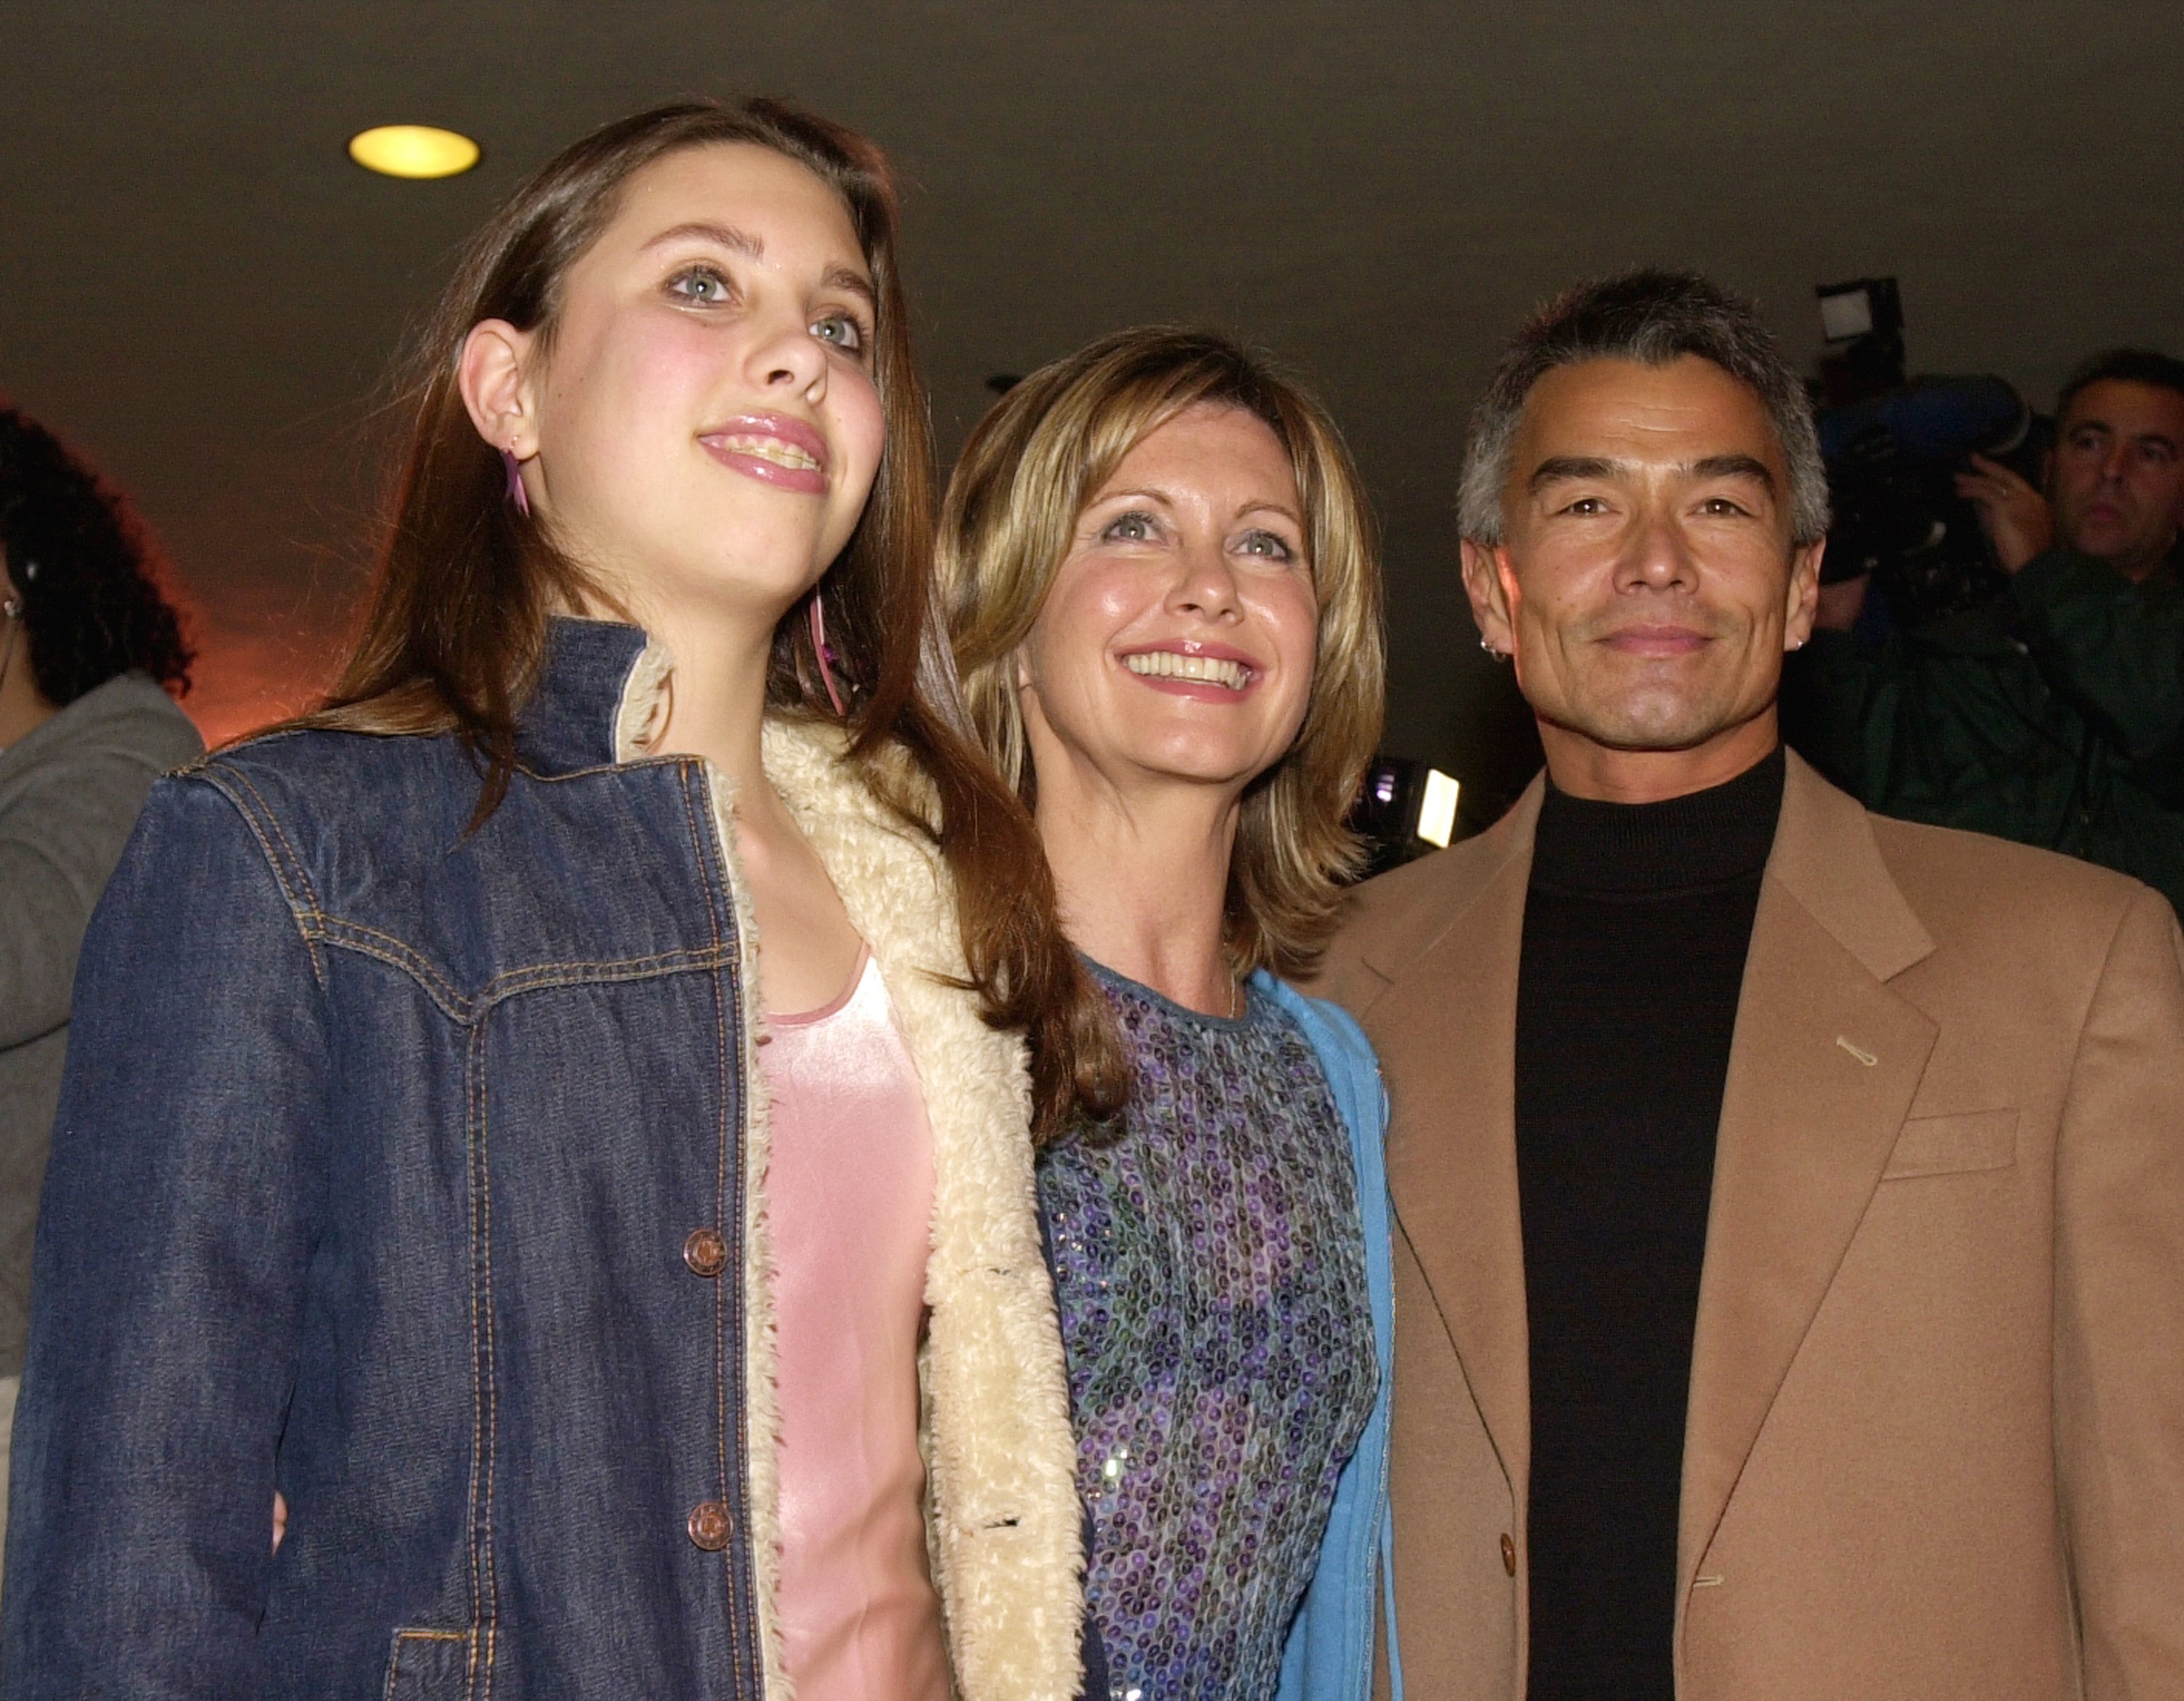 Chloe Lattanzi, Olivia Newton-John, and Patrick Kim McDermott at the "Mamma Mia!" New York opening night on February 26, 2001. | Source: Getty Images